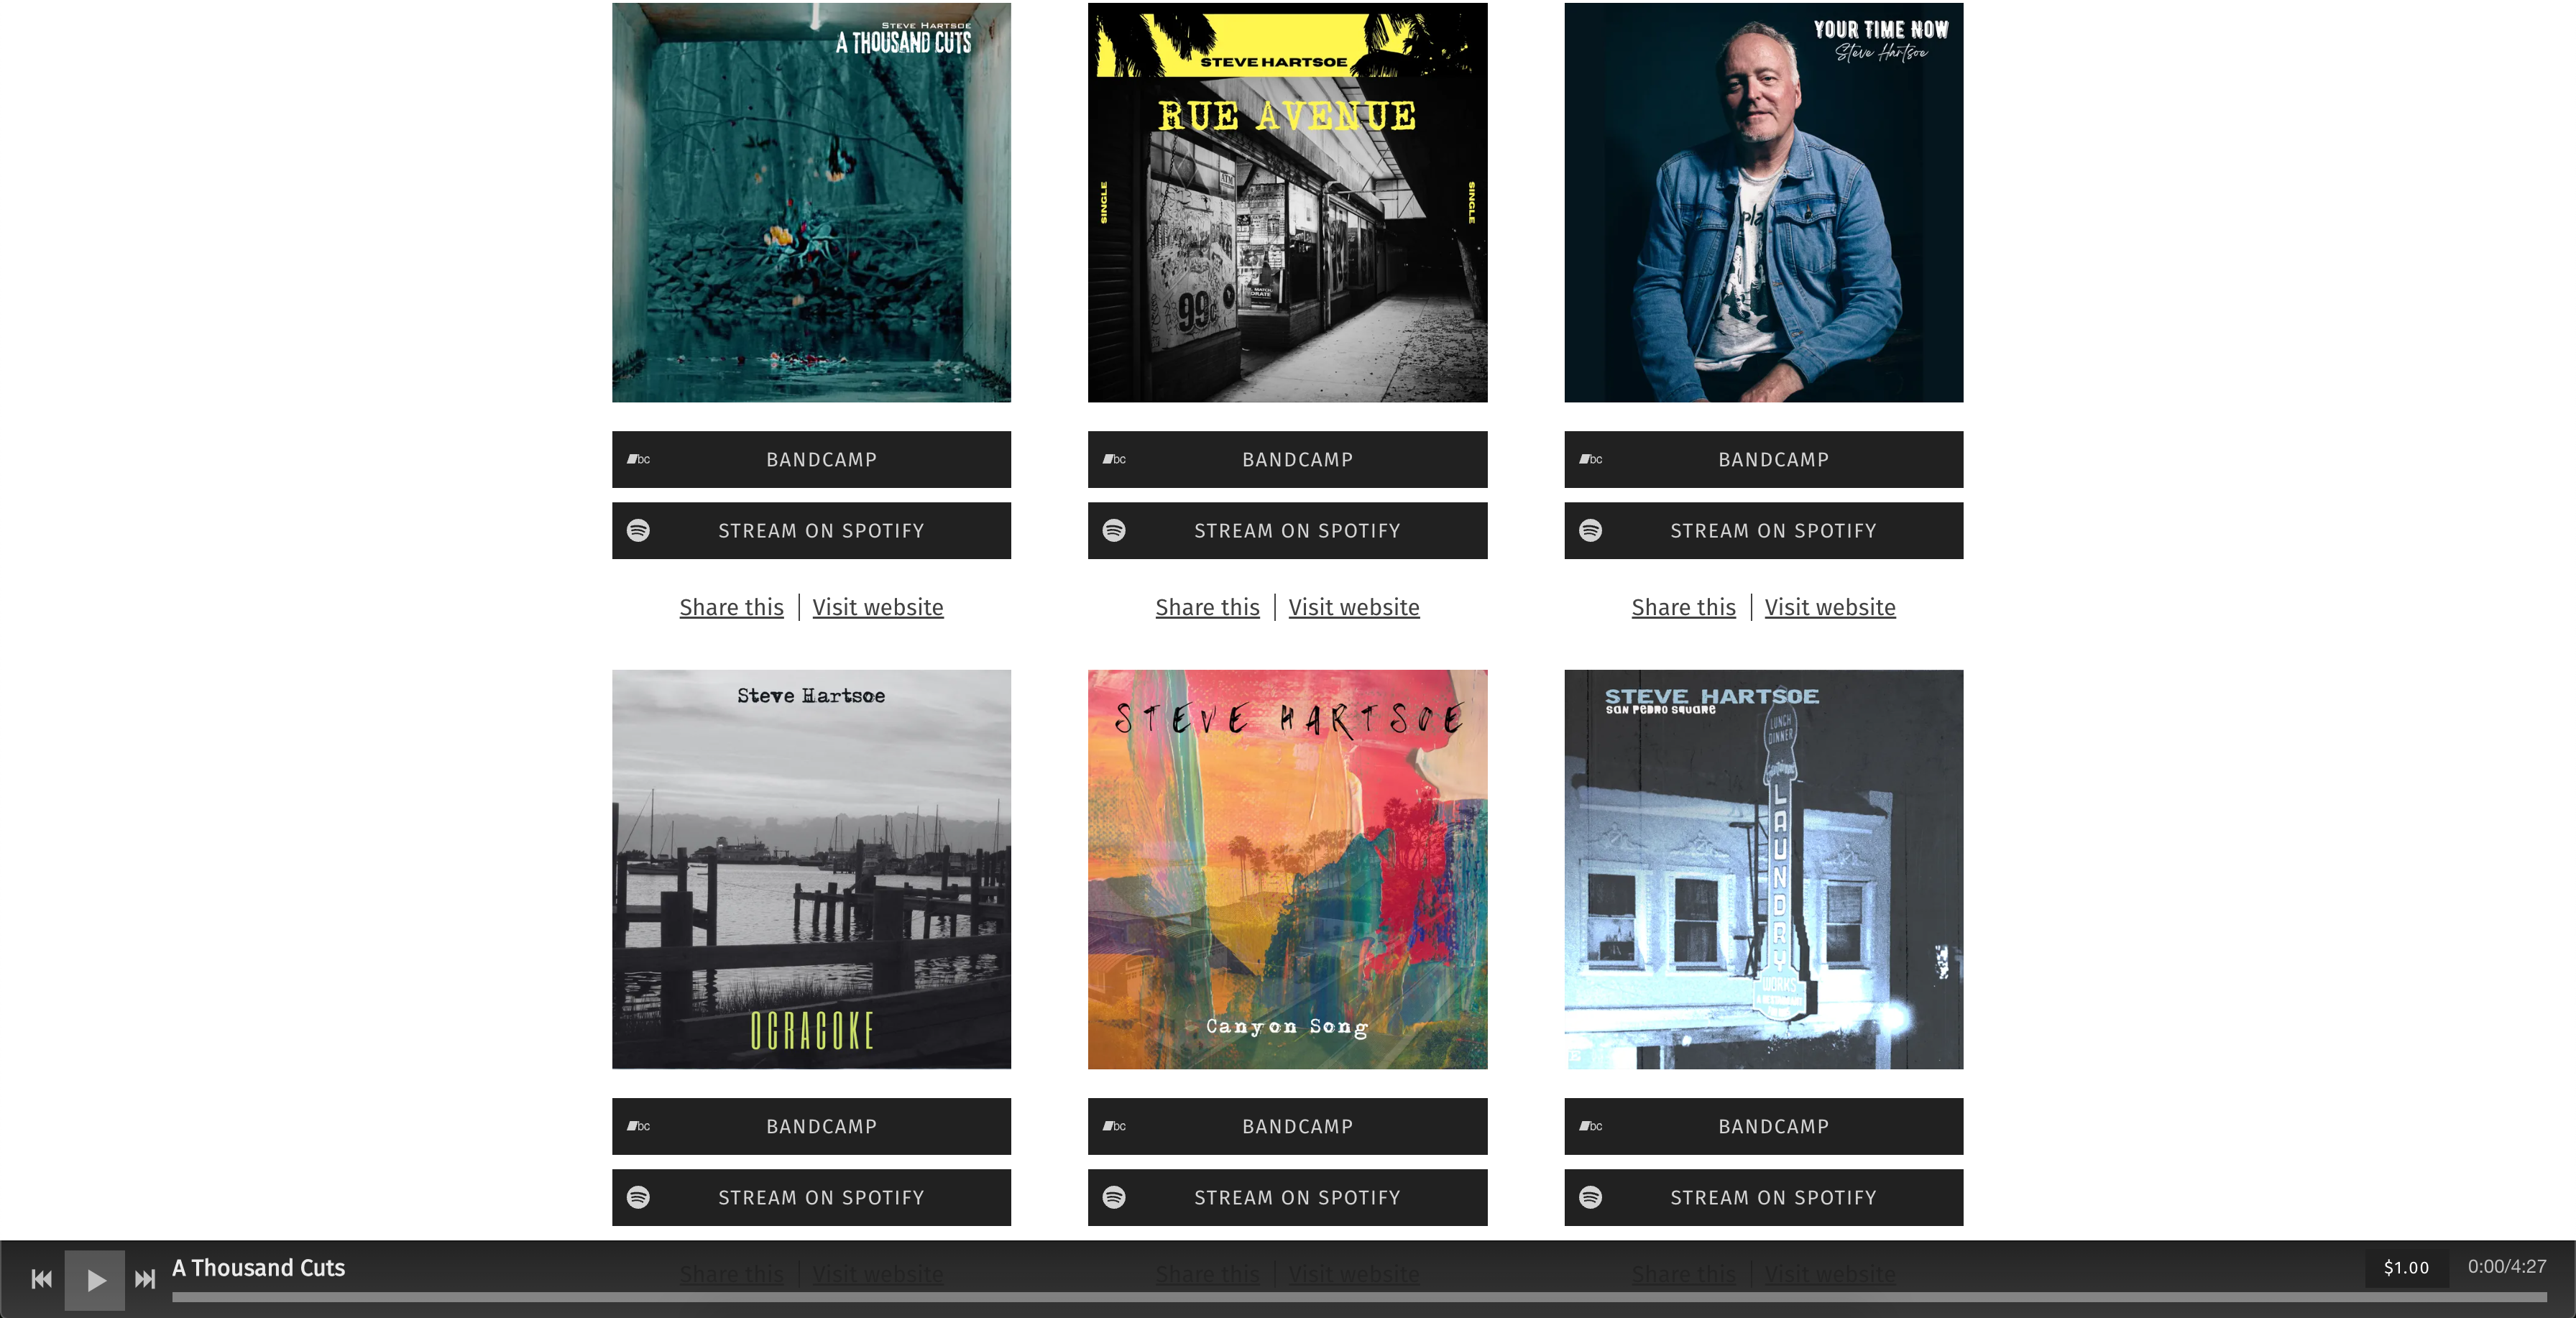 Bandzoogle - 음악가를 위한 최고의 스마트 링크 페이지입니다. 아티스트 Steve Hartsoe의 음악 웹사이트, Smart Links 페이지 스크린샷